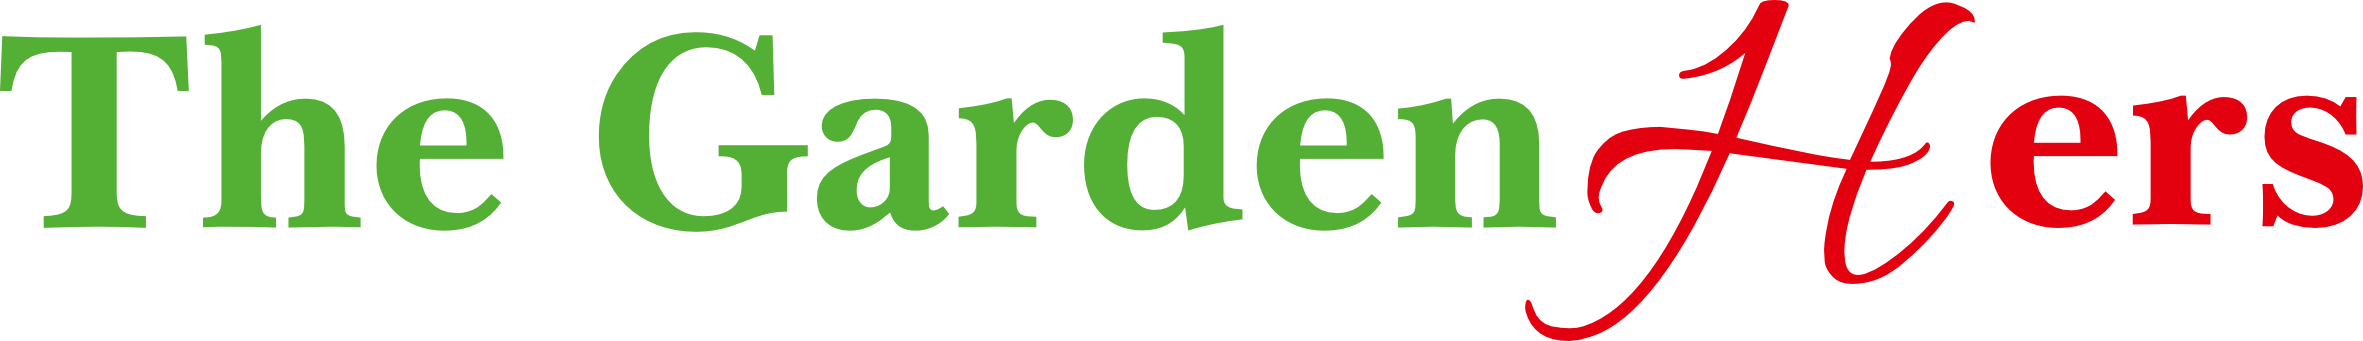 The GardenHers logo